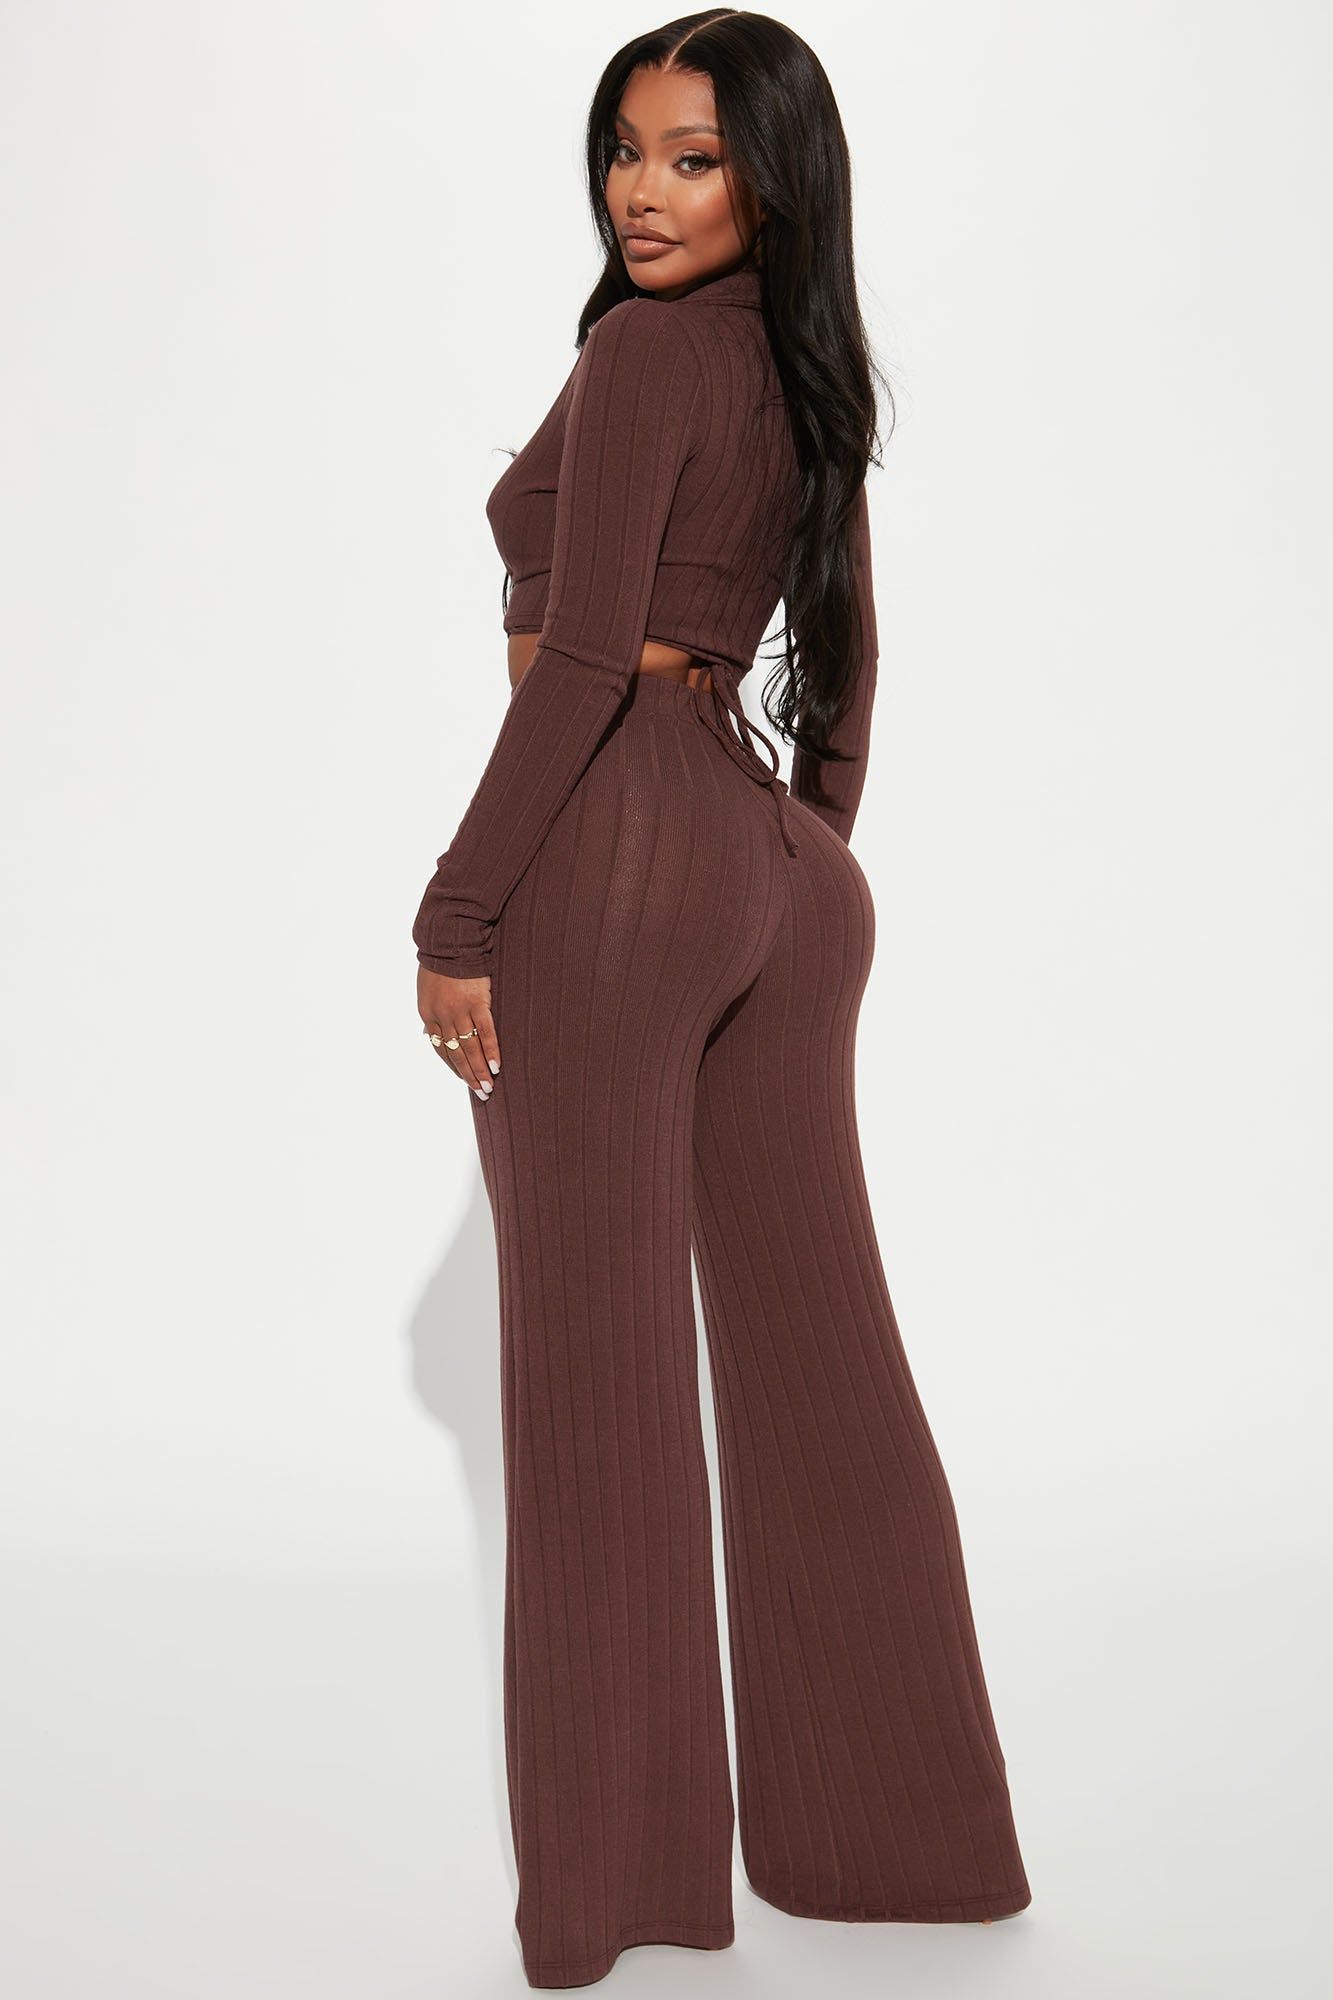 Women's Alexandrea Long Sleeve Pant Set in Brown Size Small by Fashion Nova